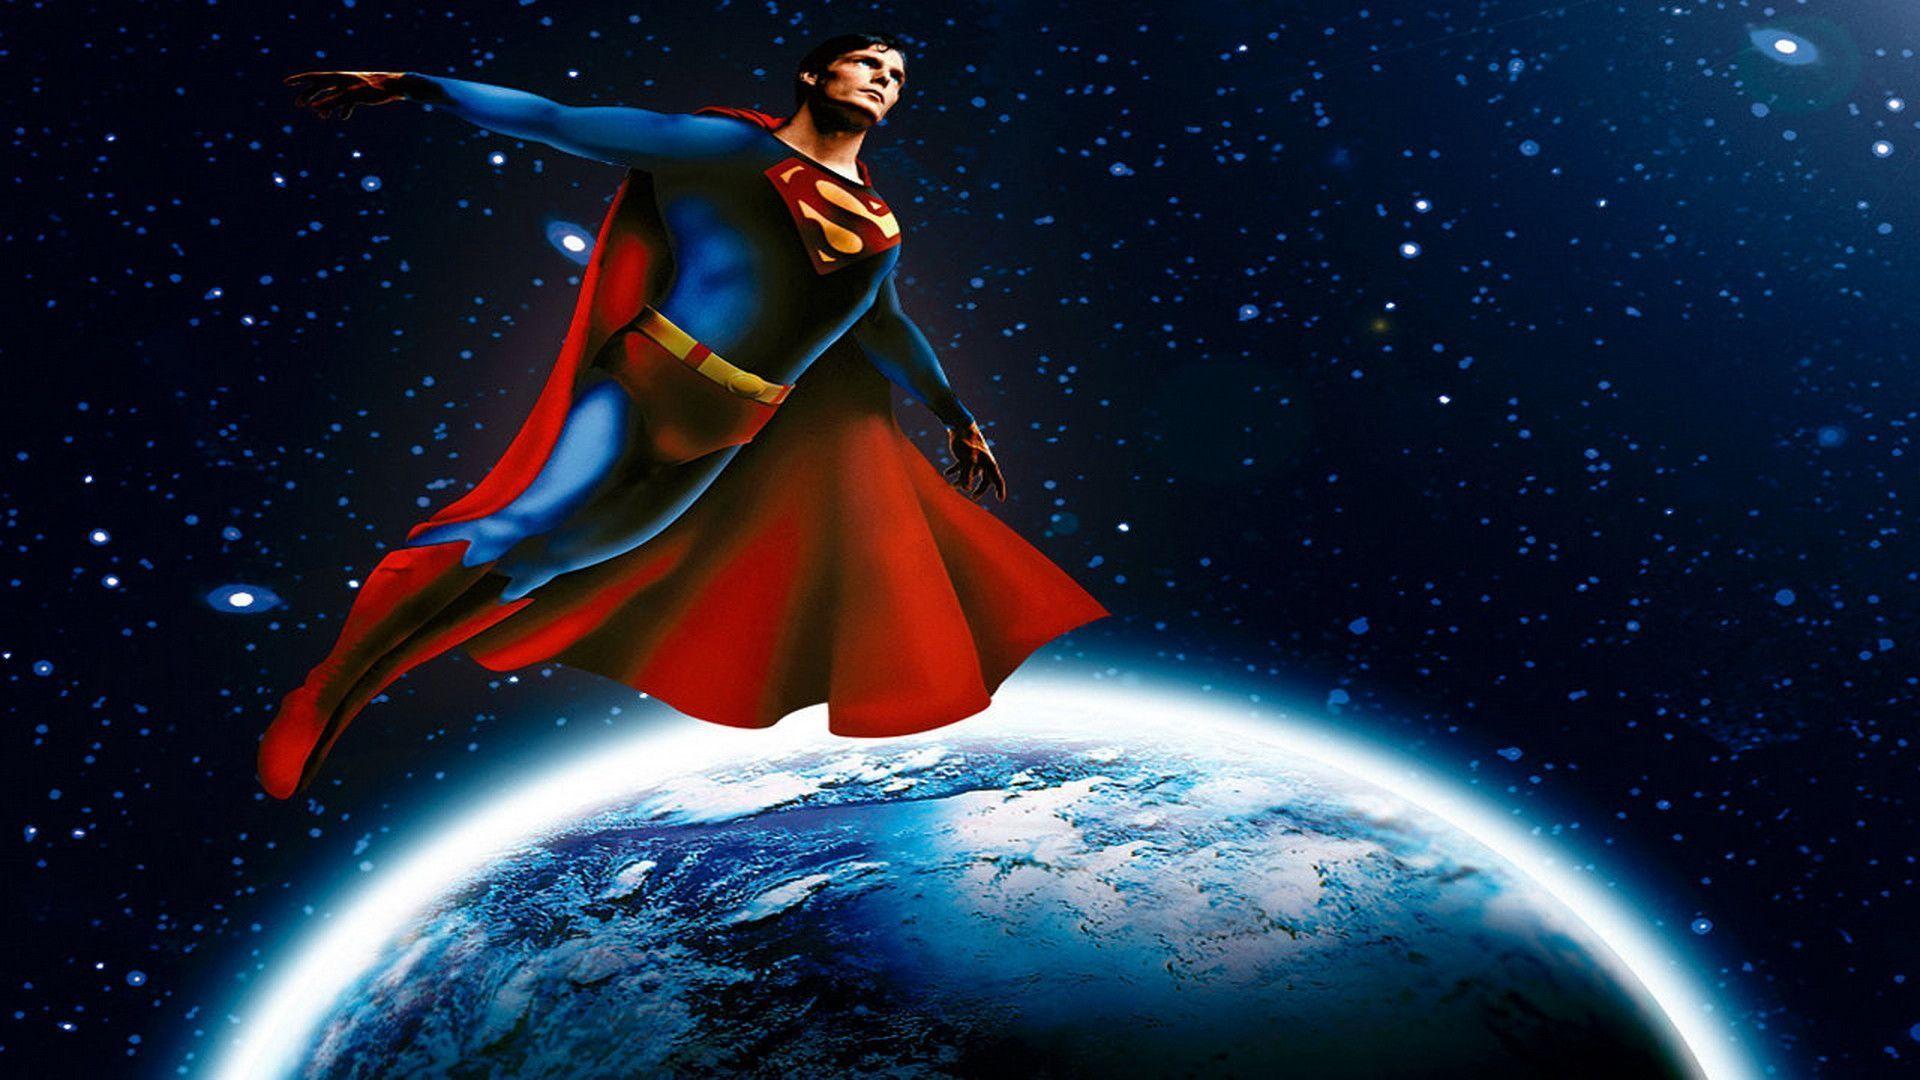 Best Superman 2K Wallpapers for Desktop